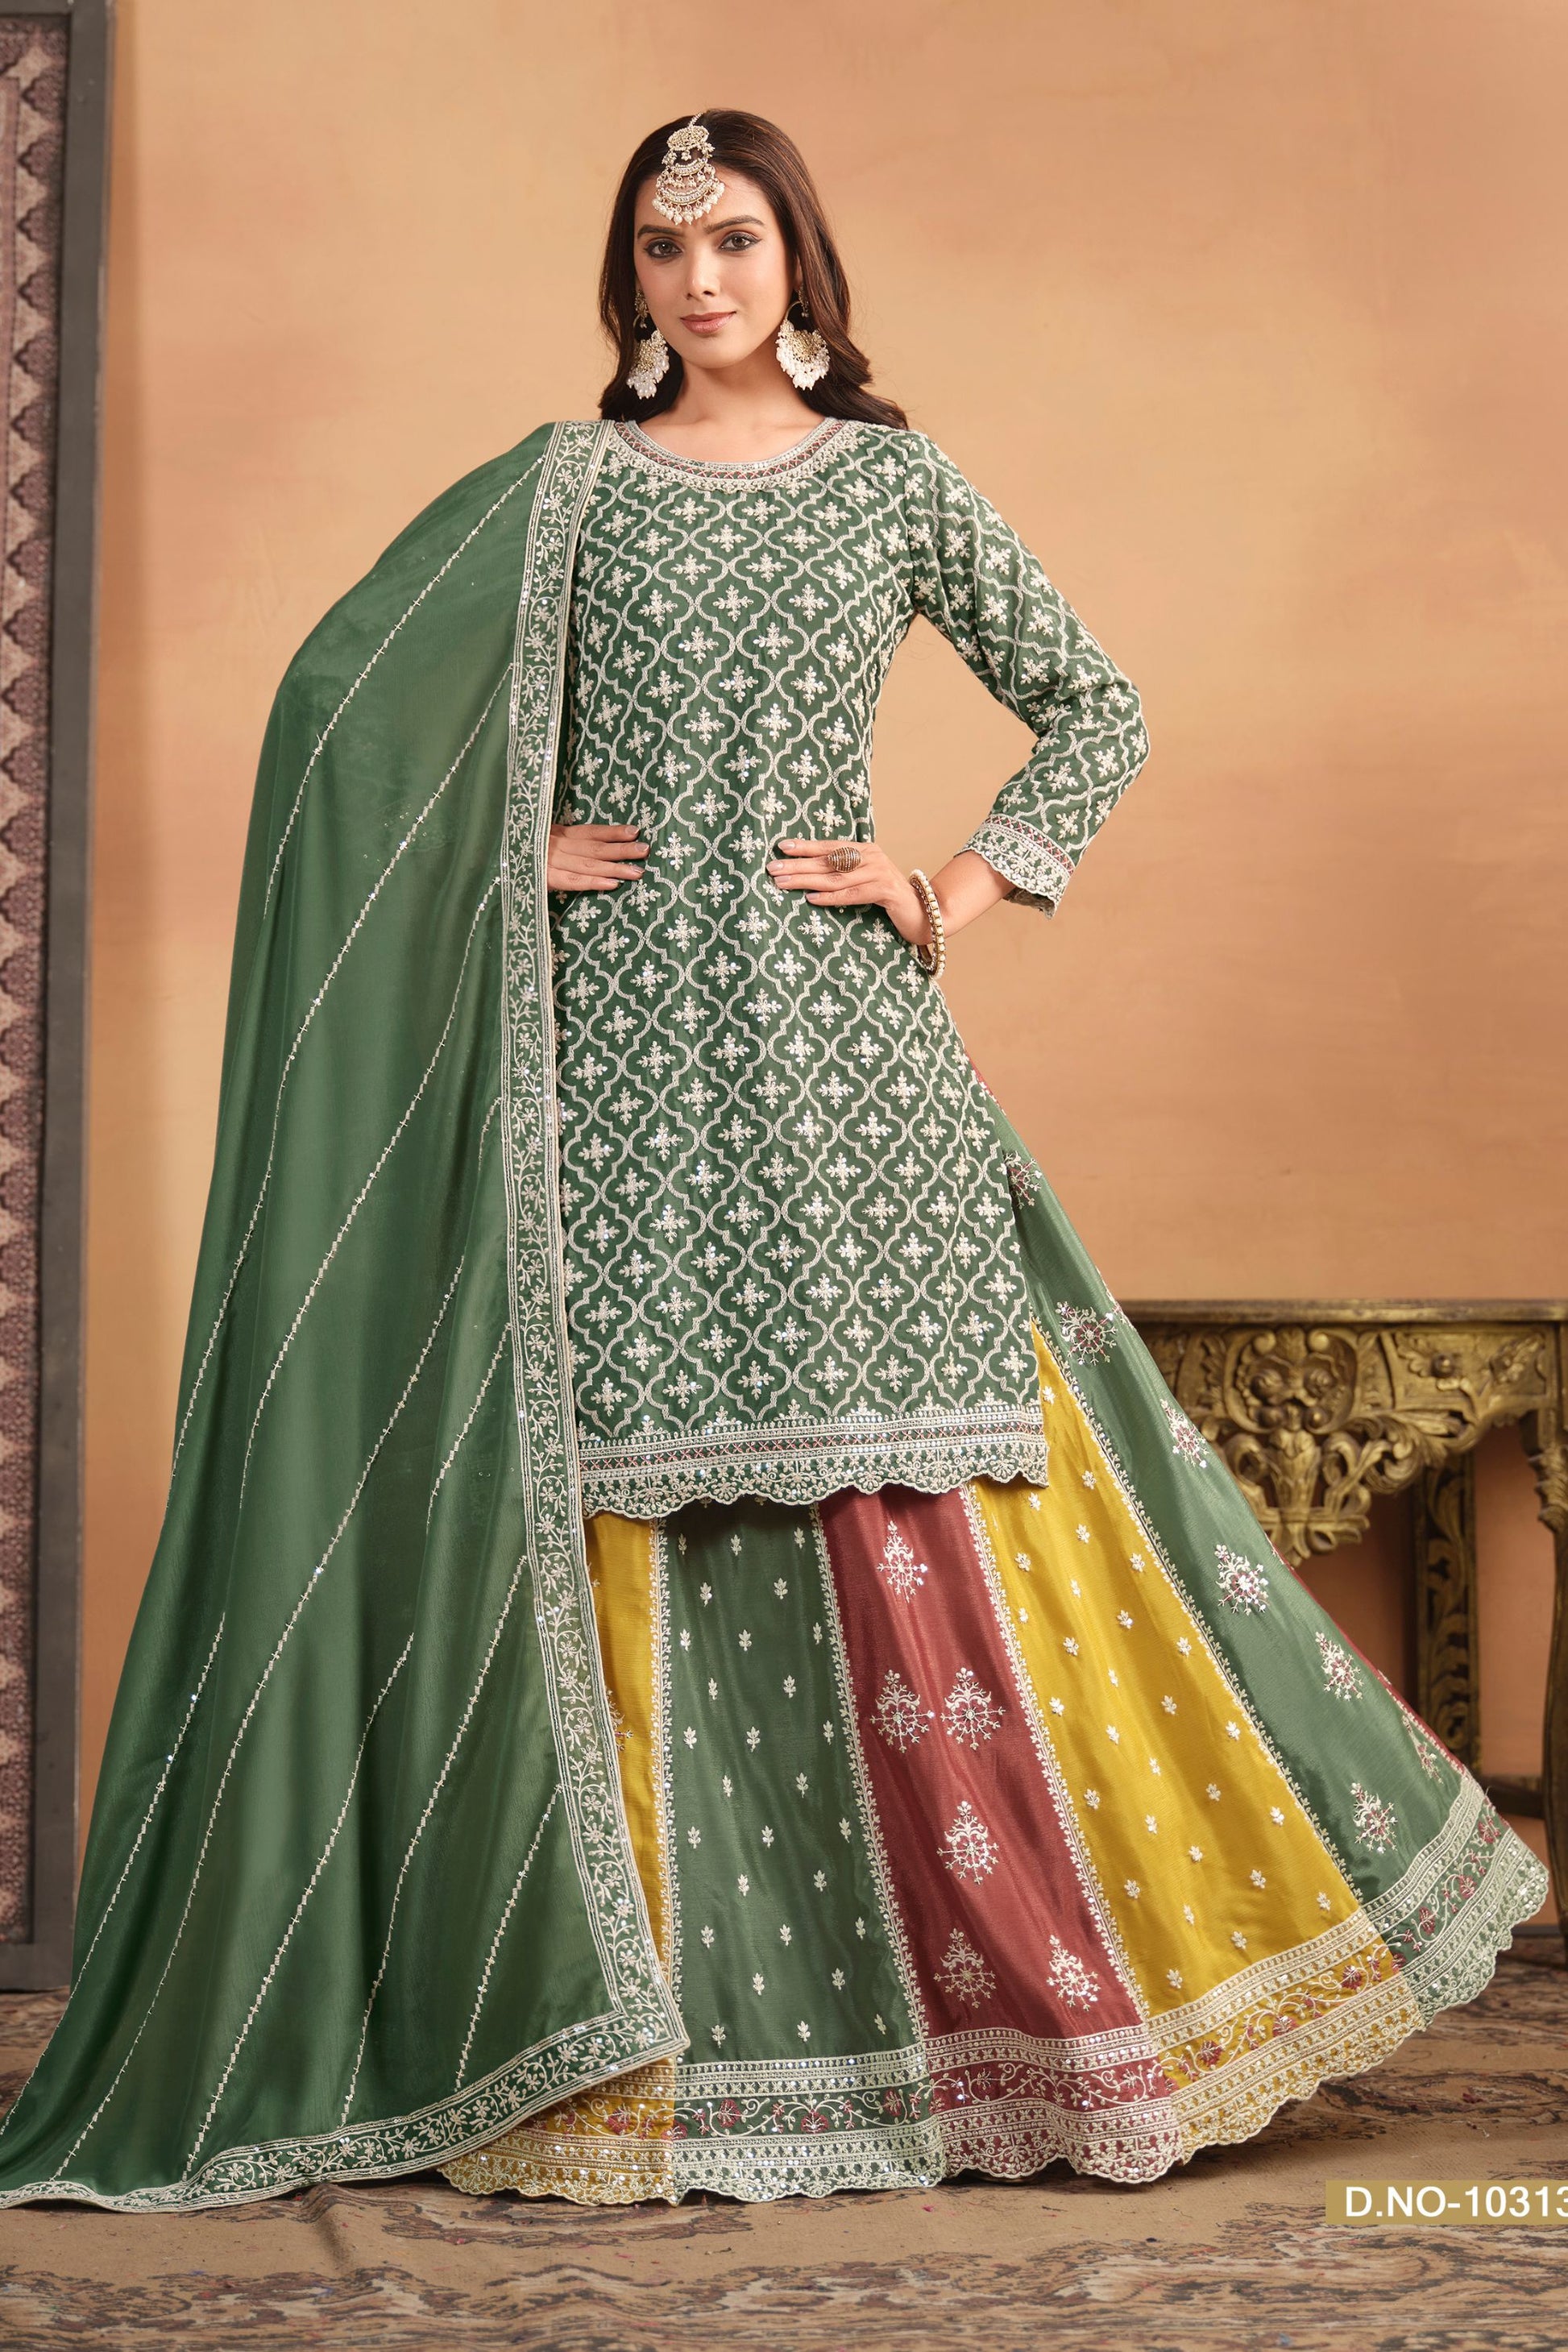 Green Chinon Silk Lehenga Choli with Multicolor Lehenga For Indian Festivals & Pakistani Weddings - Thread Embroidery Work